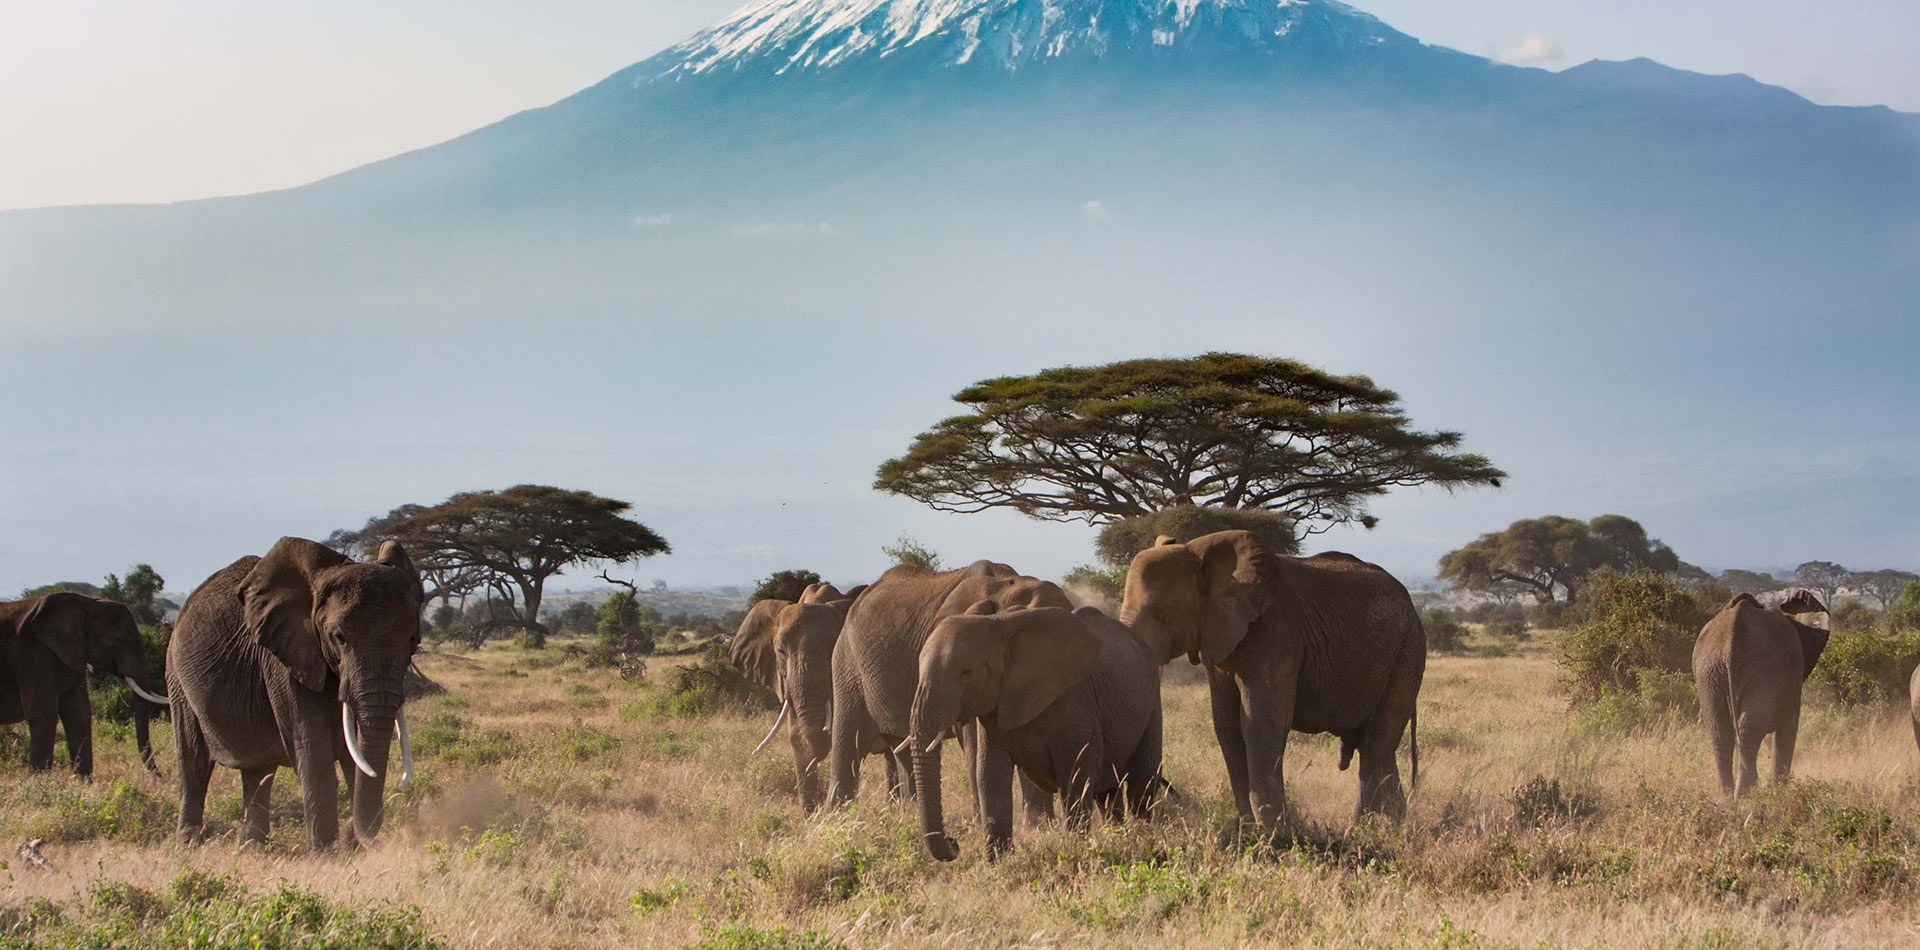 Elephants at Amboseli National Park.